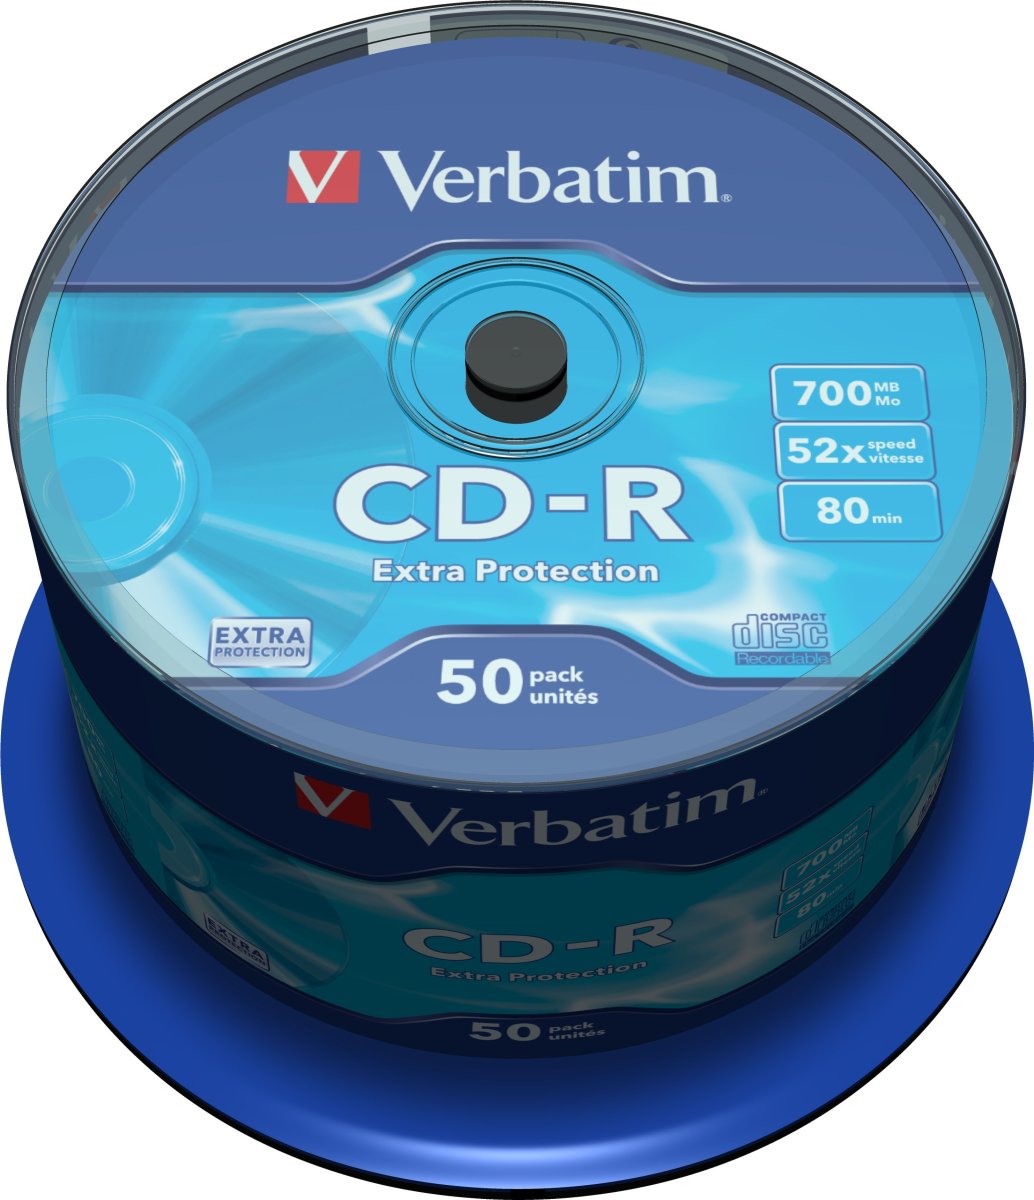 Verbatim CD-R 700mb/80min spindel, 50stk